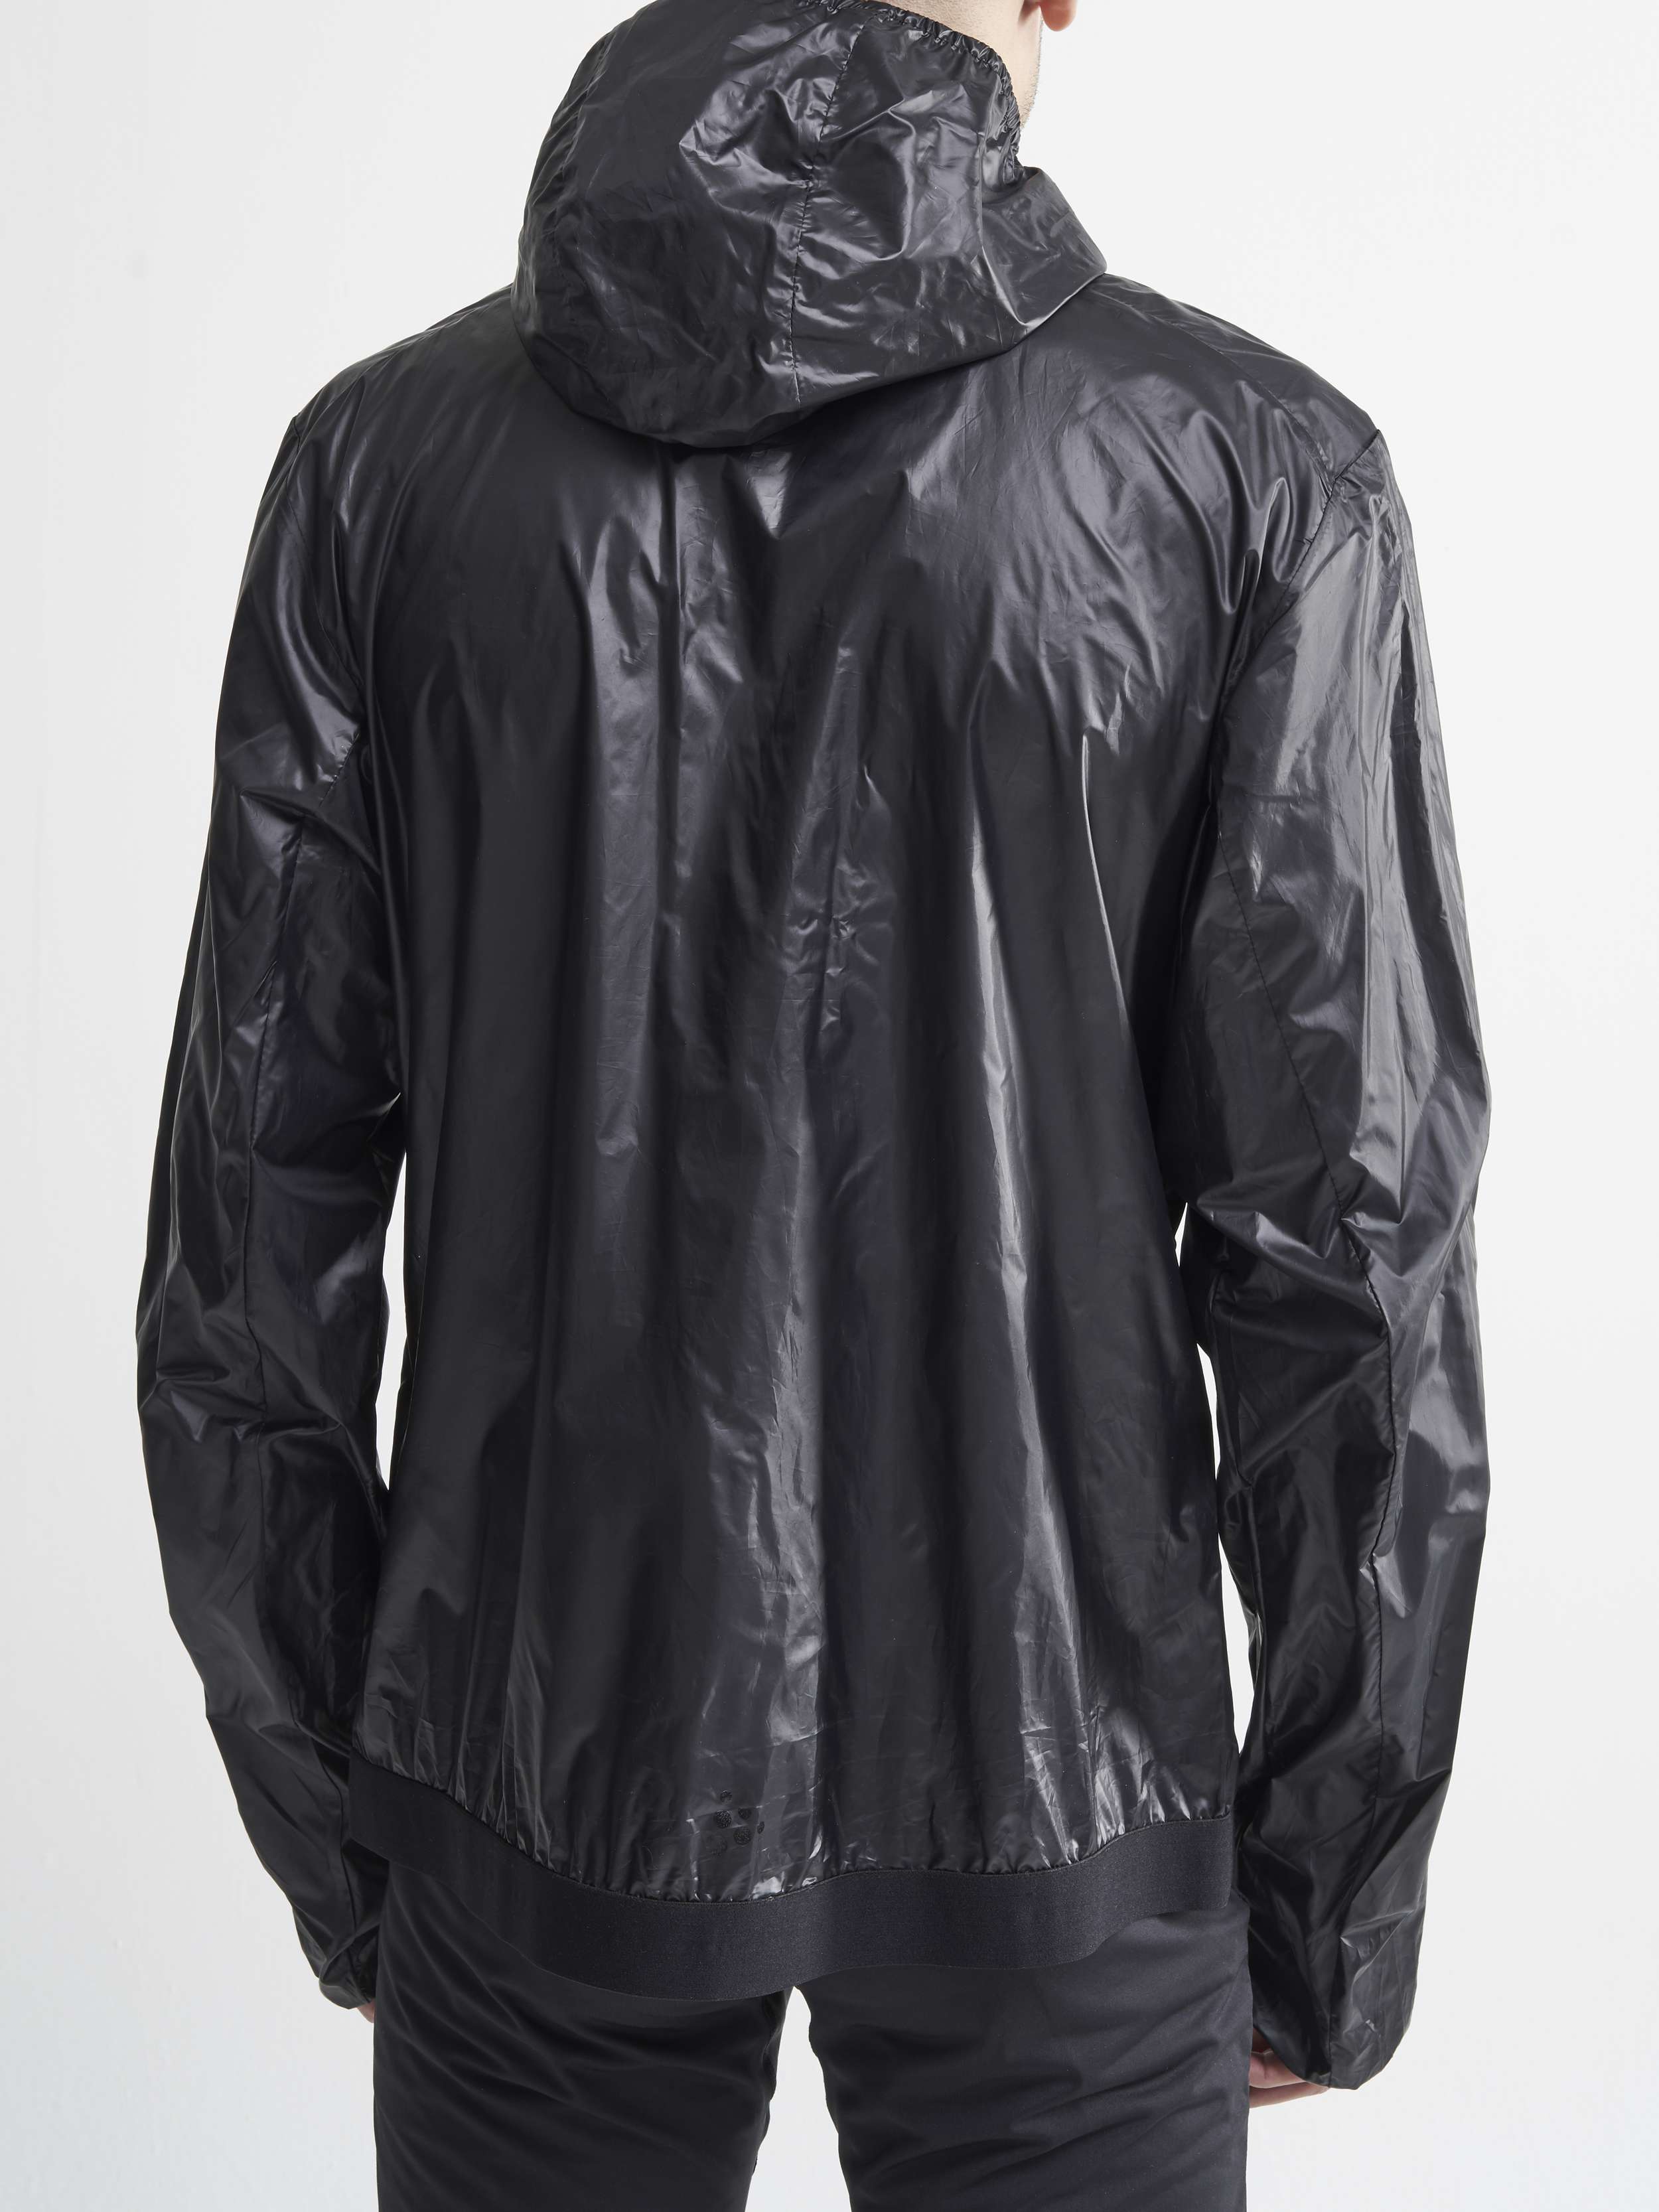 Wind Jacket M - Black | Craft Sportswear